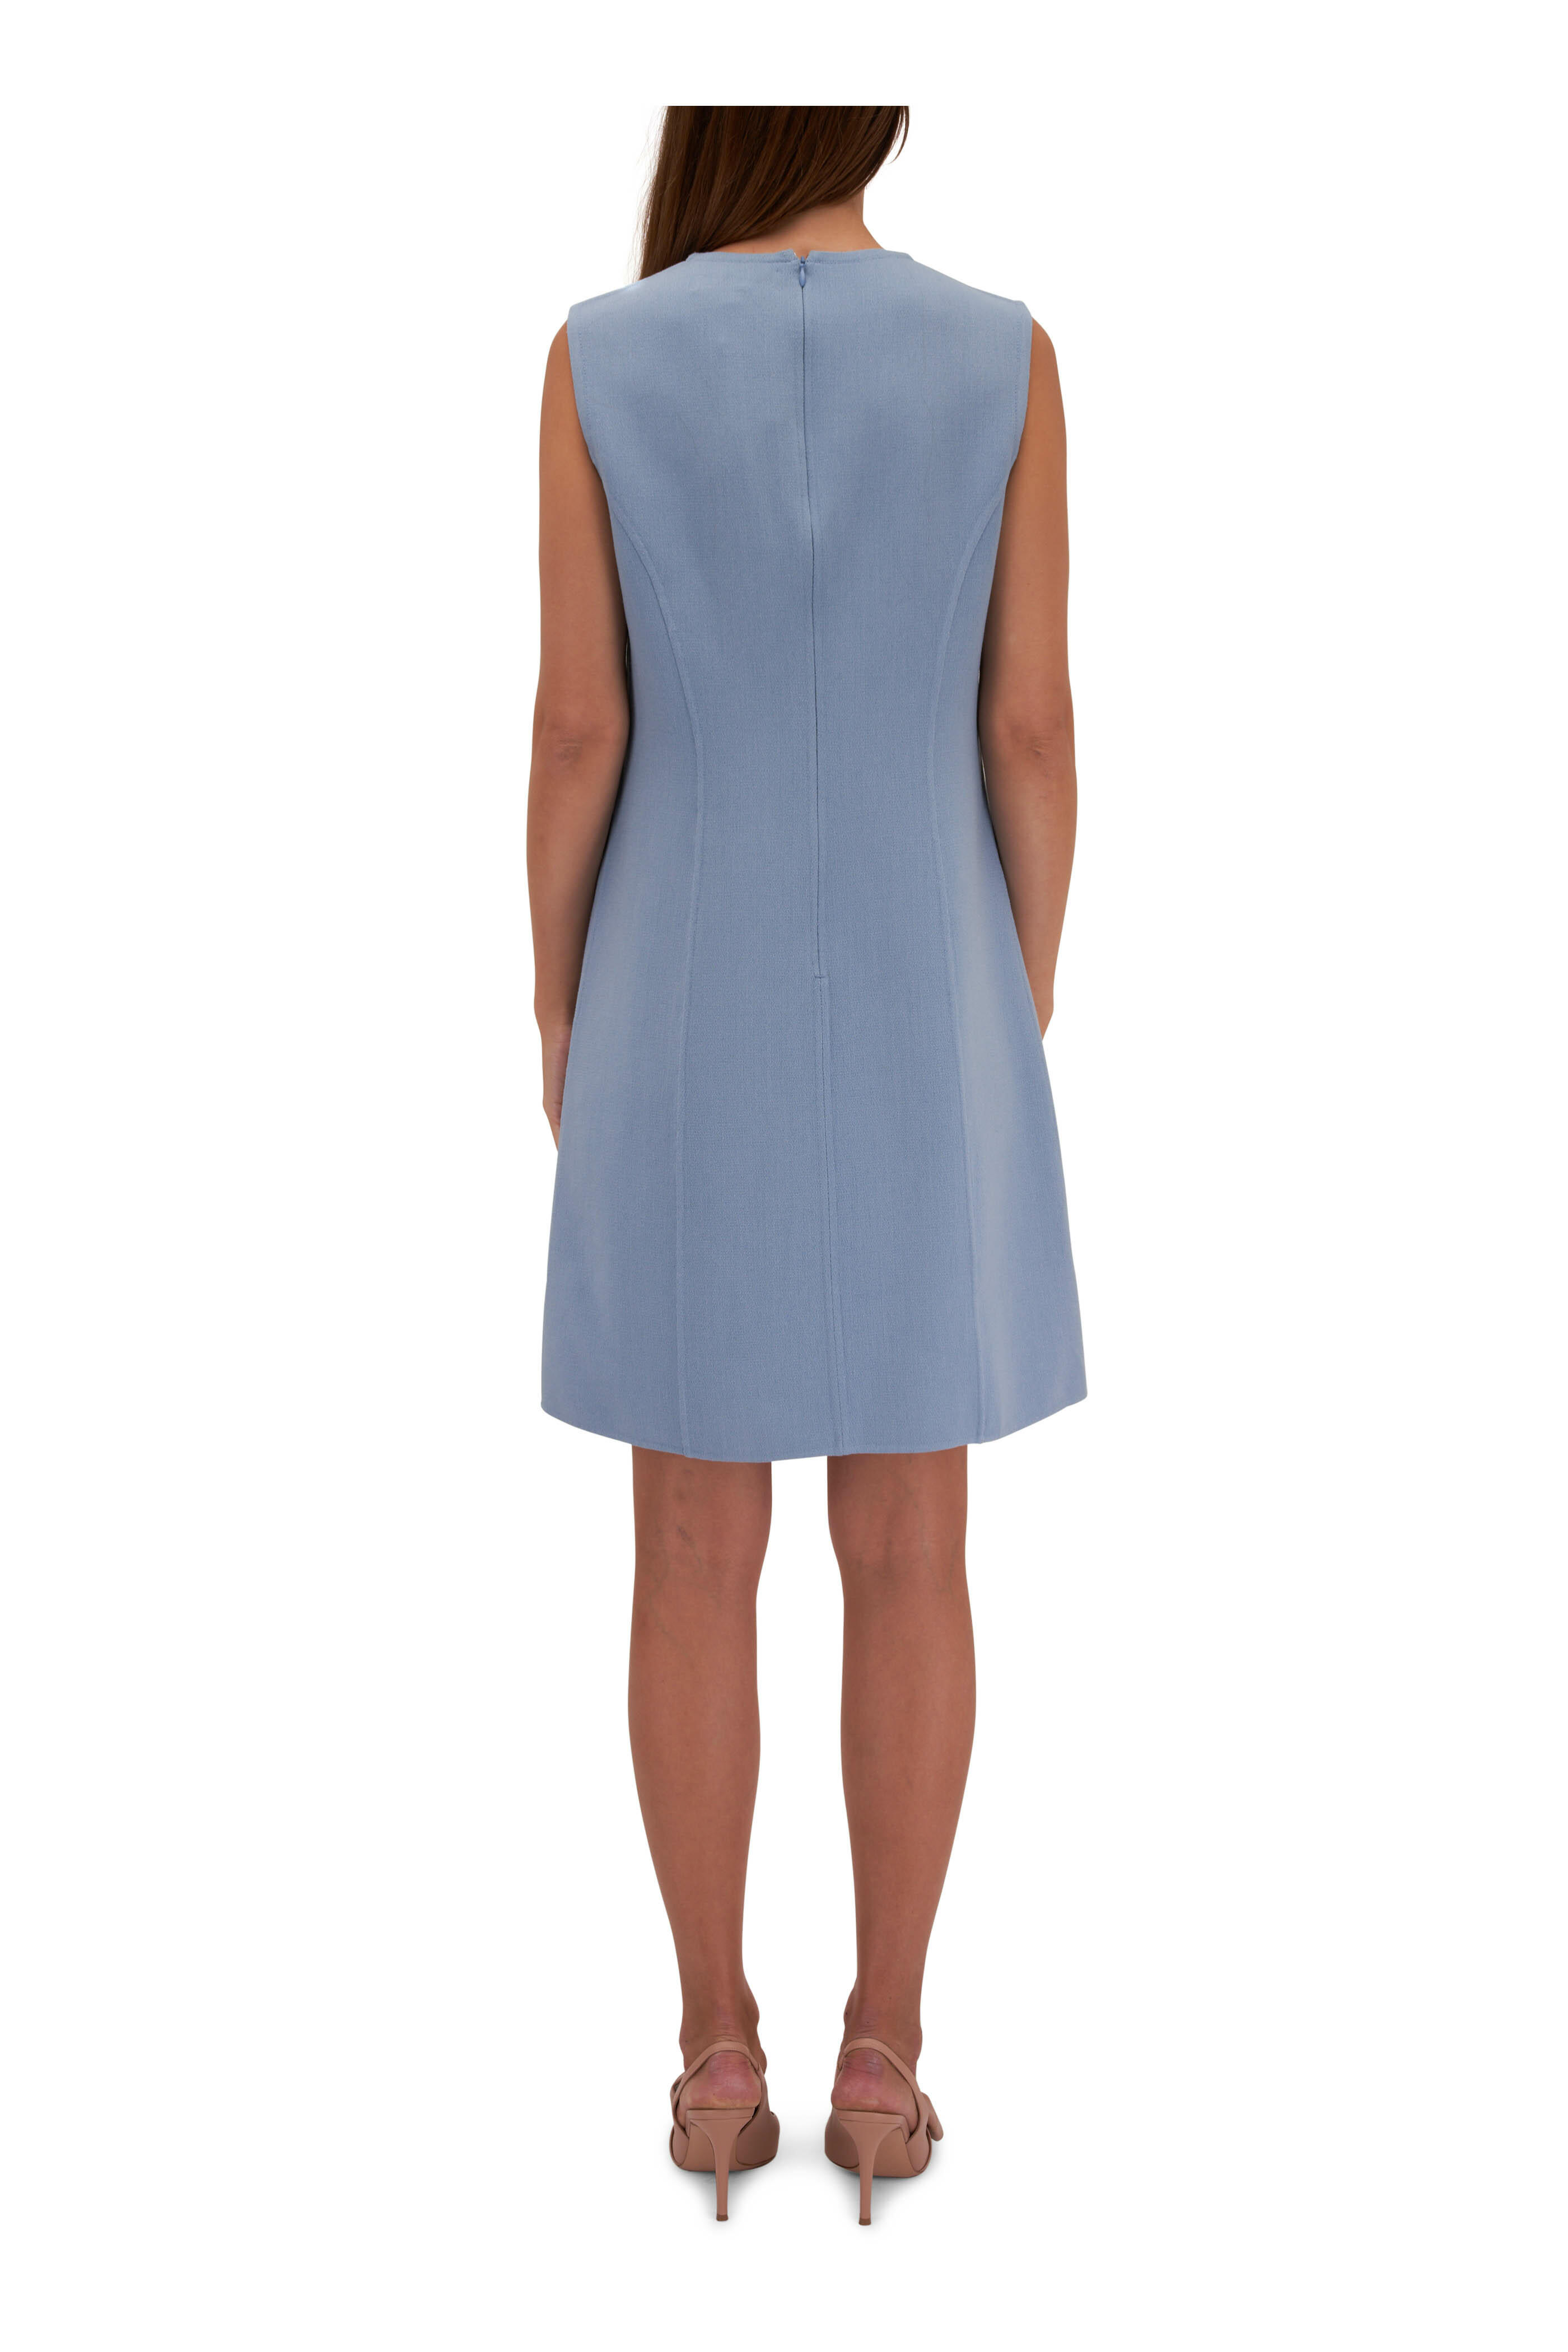 Michael Kors Shift Dress Royal Blue Stretch Wool Crepe Size 6